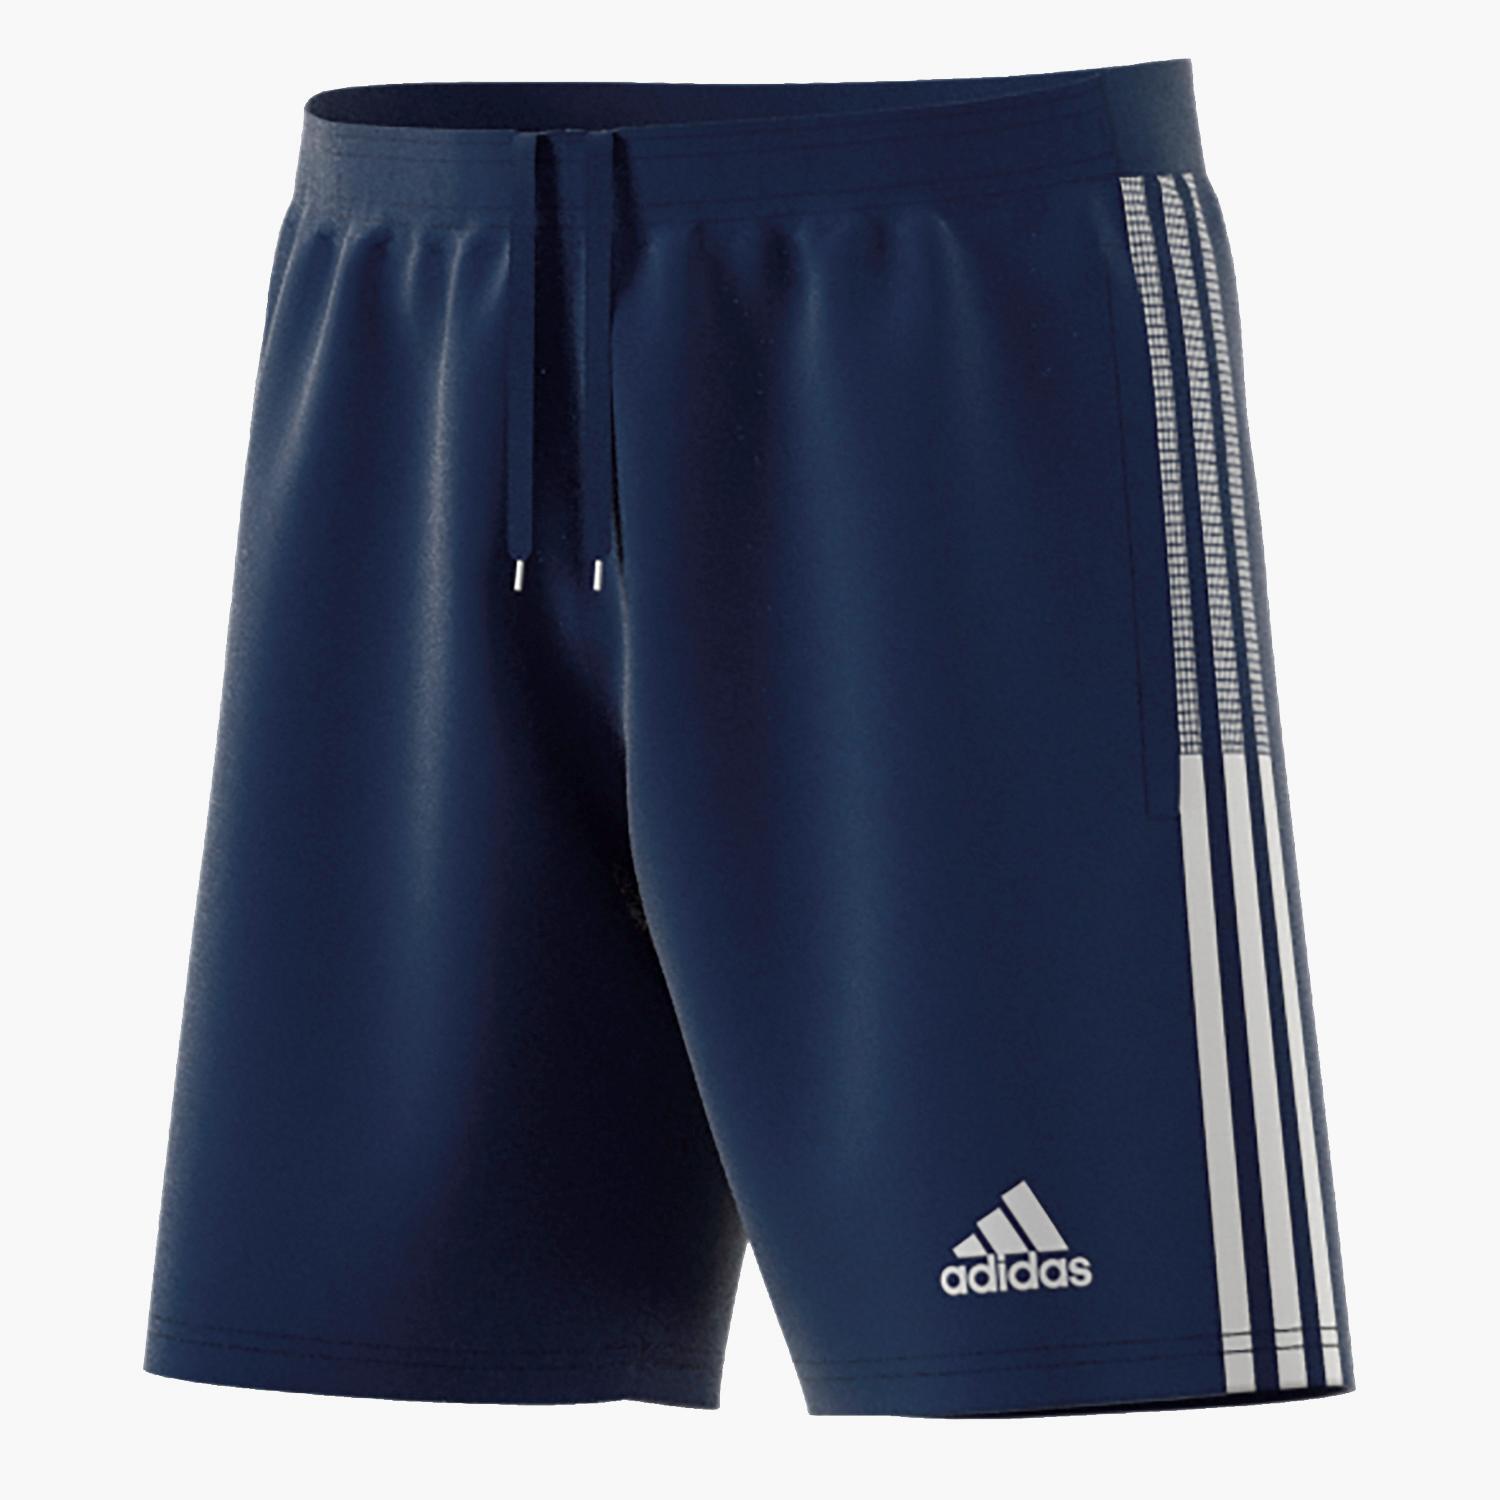 adidas Tiro 21 - Bleu marine - Pantalon de football homme sports taille S